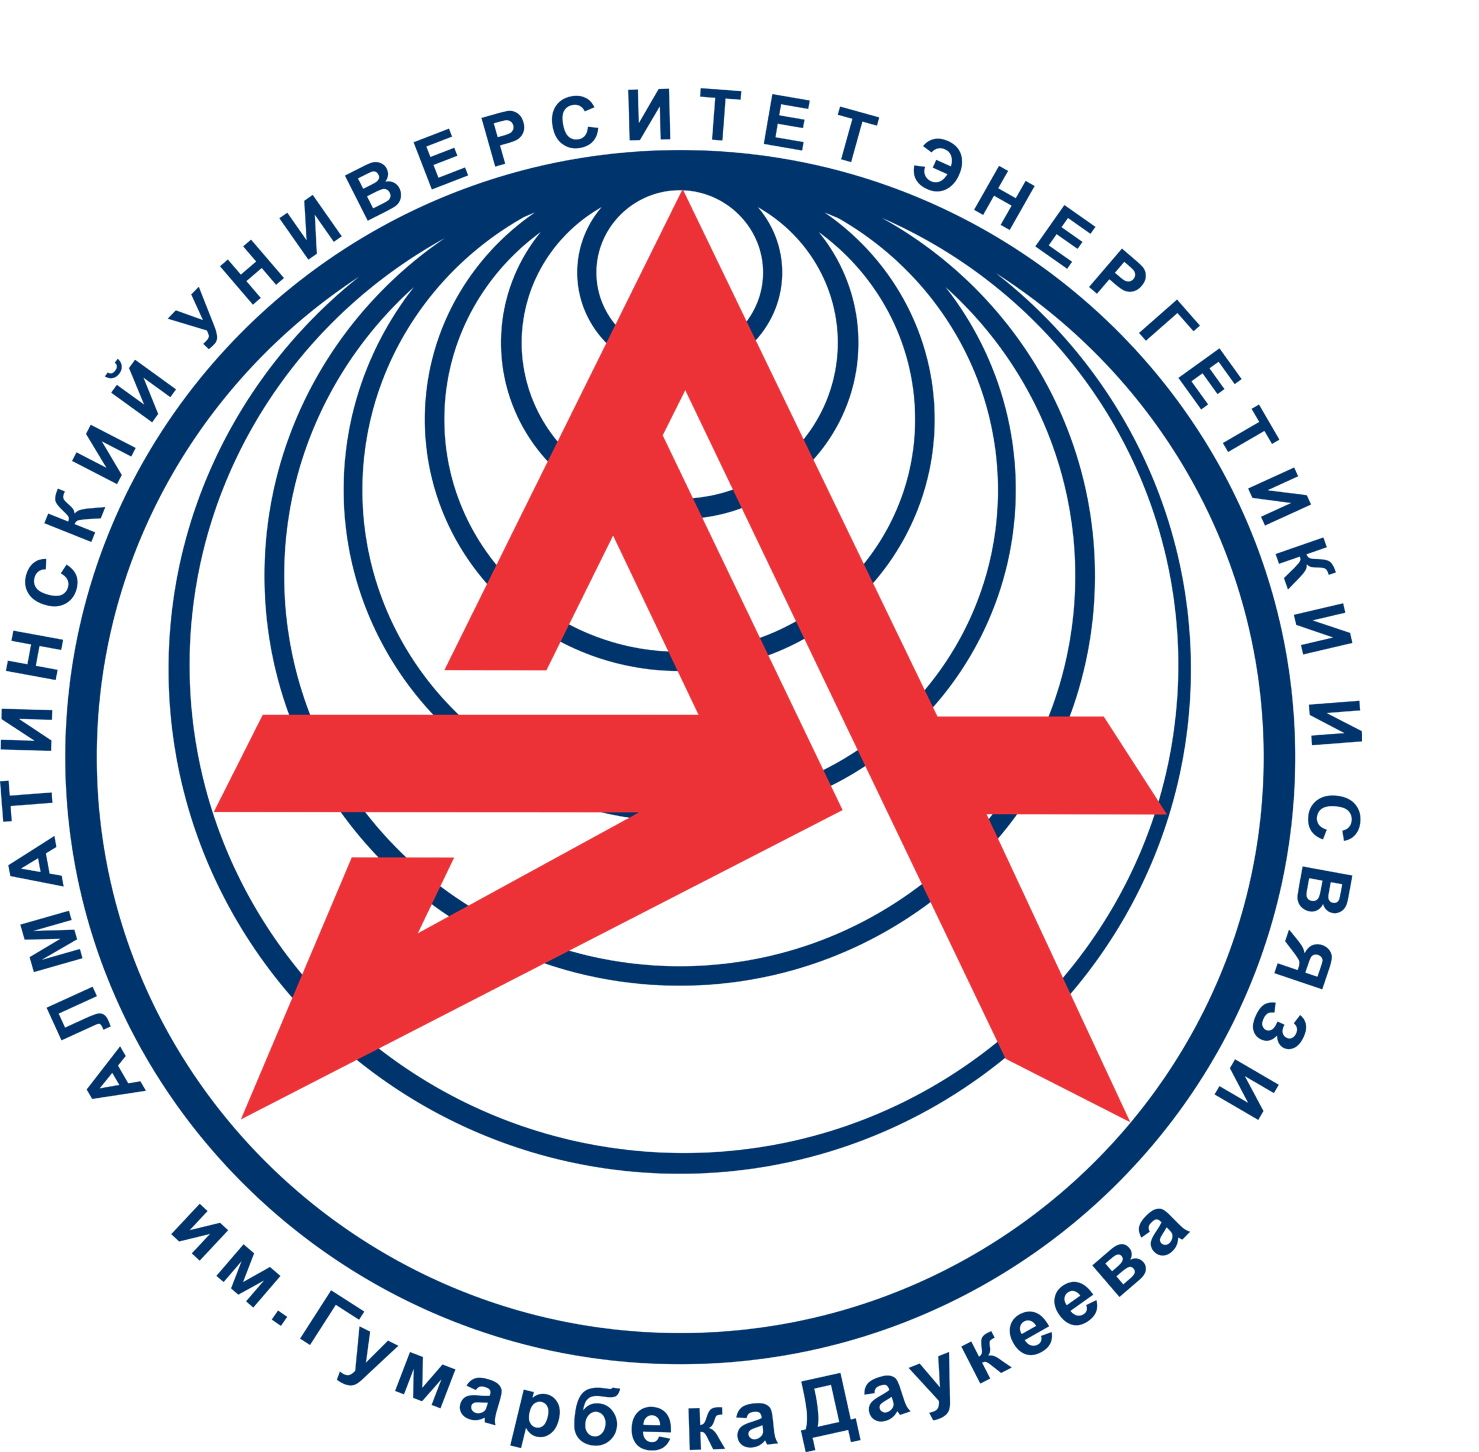 AUES Logo